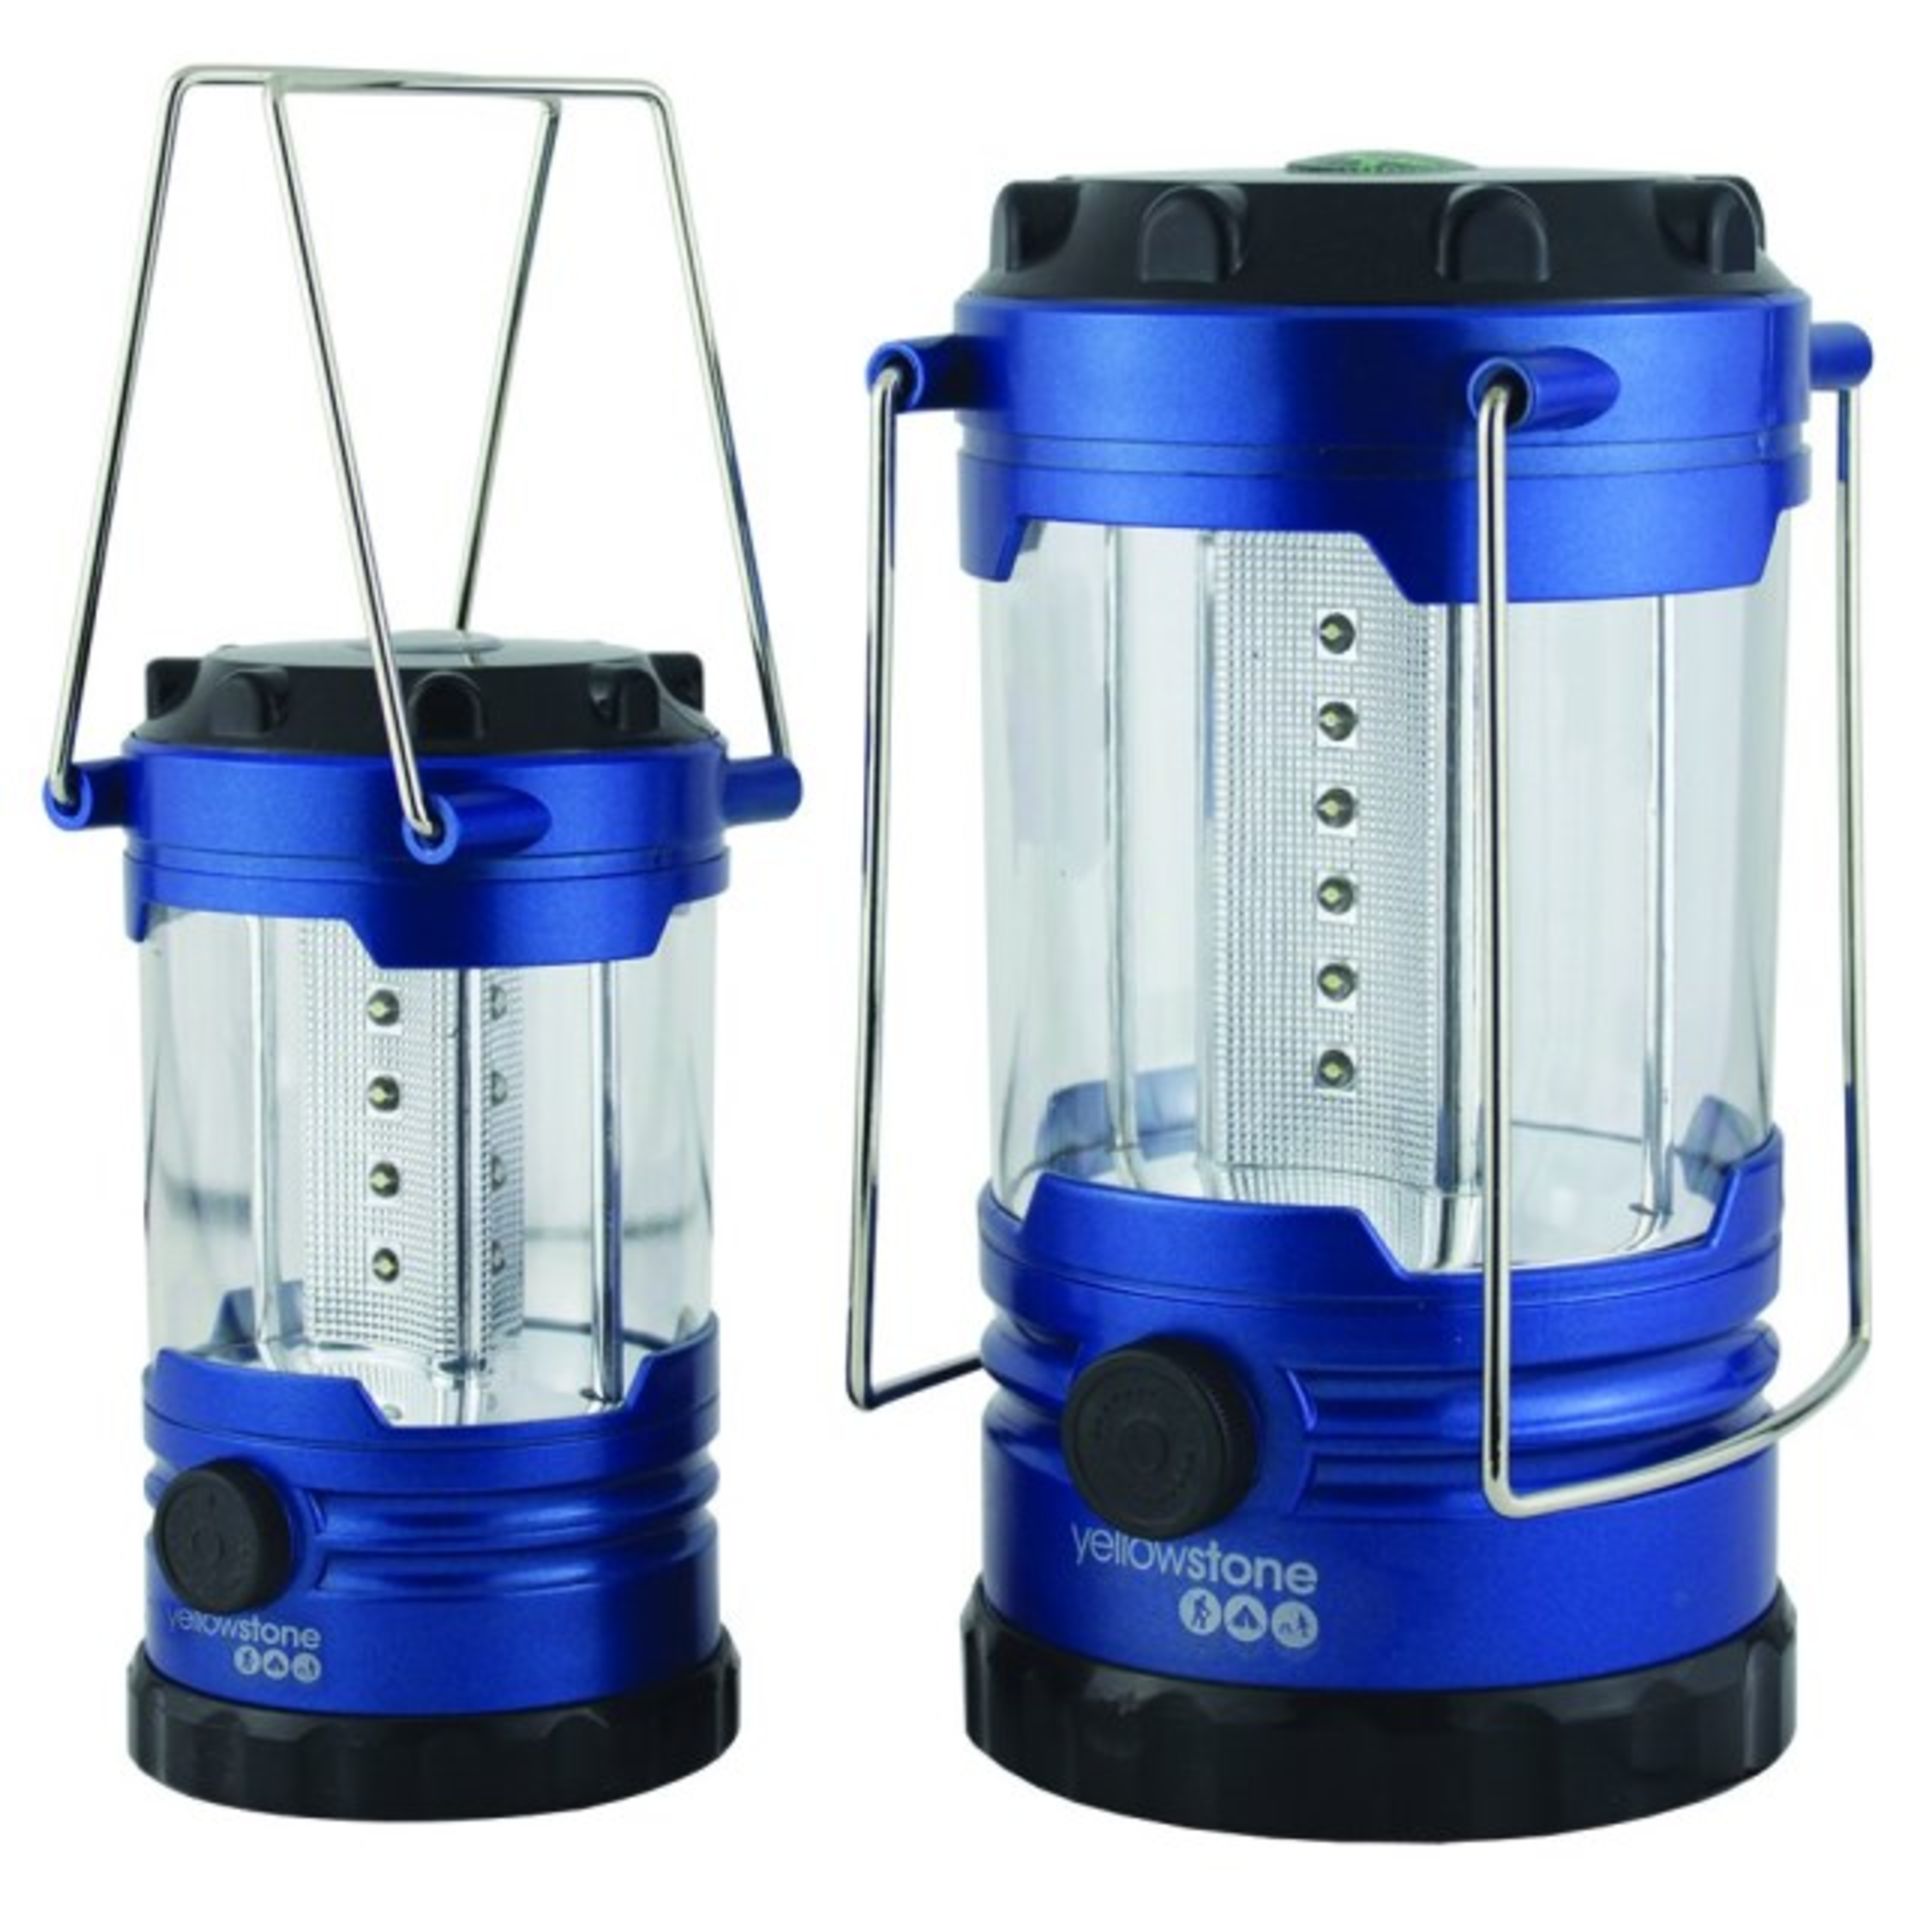 V  Grade A LED Two Lantern Set - Ultra Bright - 18 Hour Burn Time RRP £29.99 X  2  Bid price to be